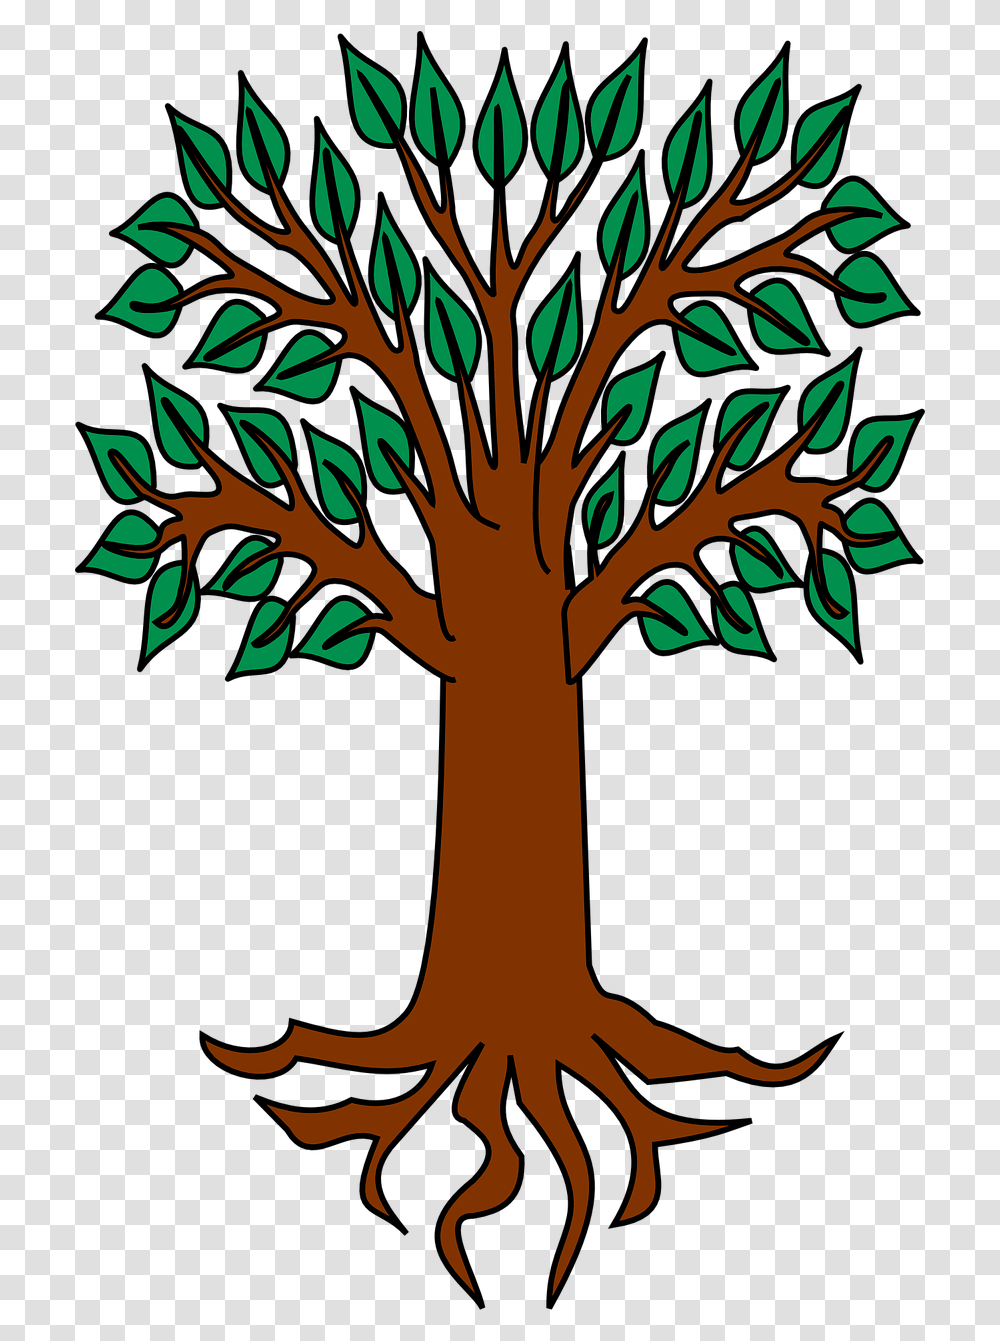 Tree Heraldic Symbol Palm Trees In Heraldry, Plant, Arecaceae, Root, Tree Trunk Transparent Png